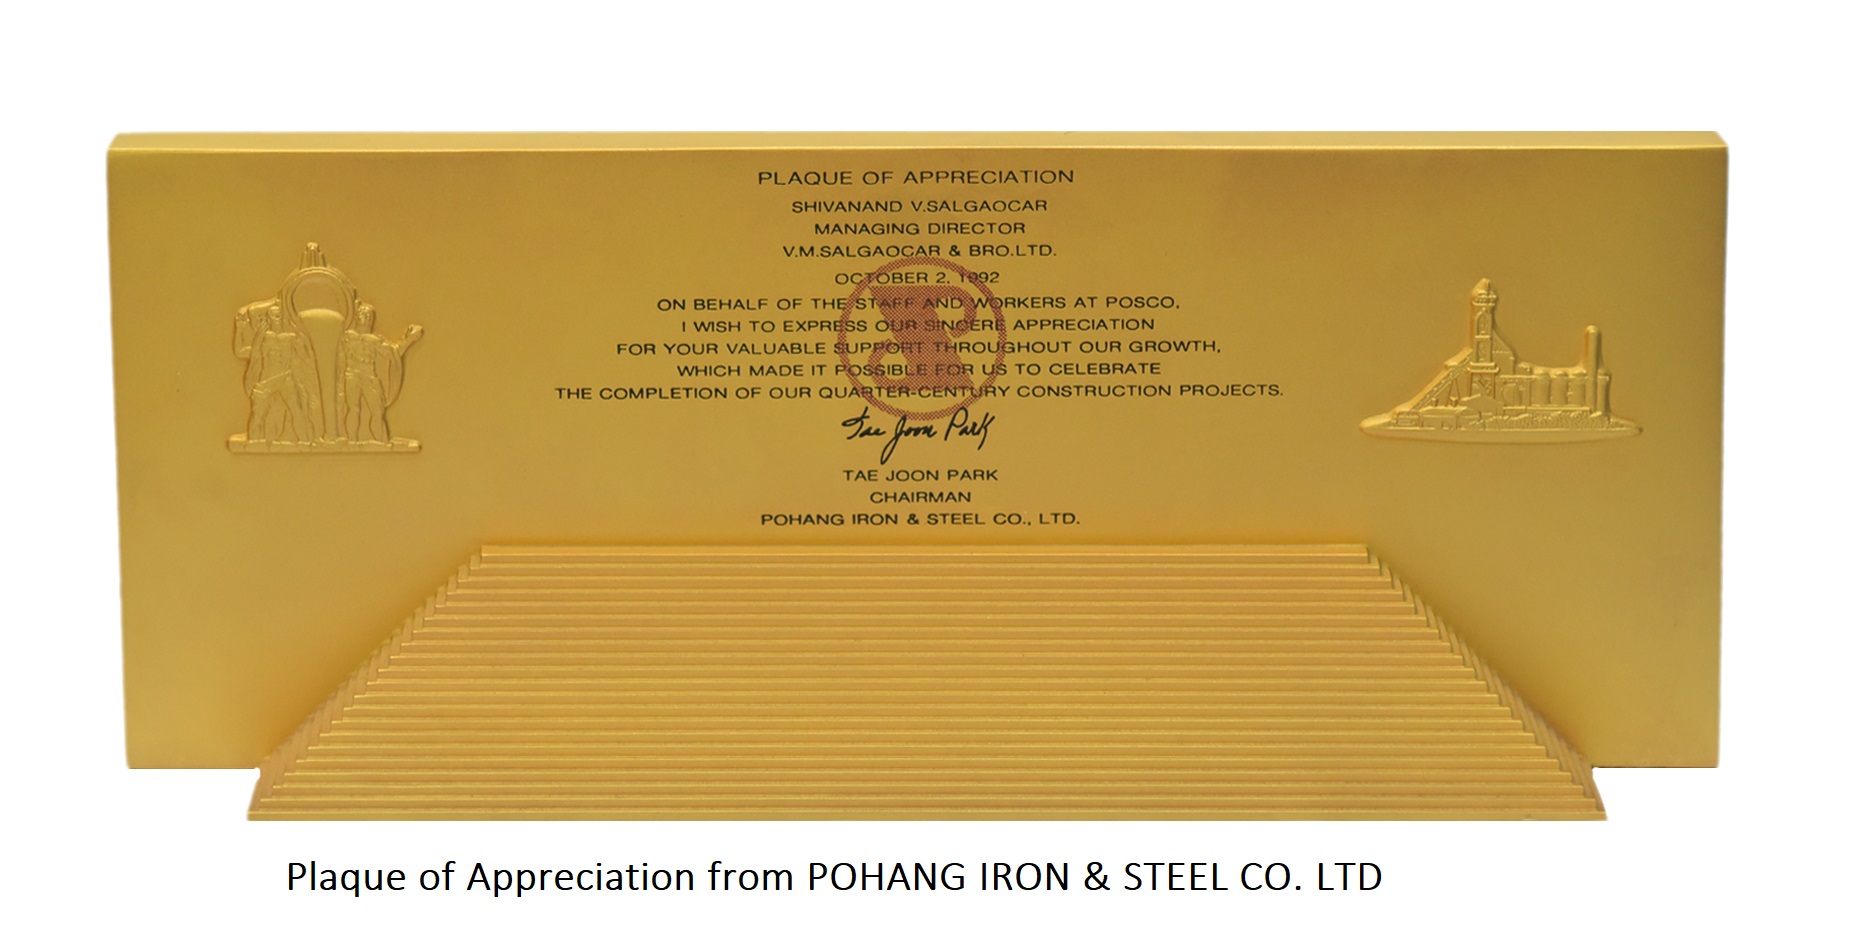 Plaque of Appreciation from POHANG IRON & STEEL CO. LTD presented to Mr. Shivanand V. Salgaocar, Managing Director, V. M. Salgaocar & Bro. Pvt. Ltd